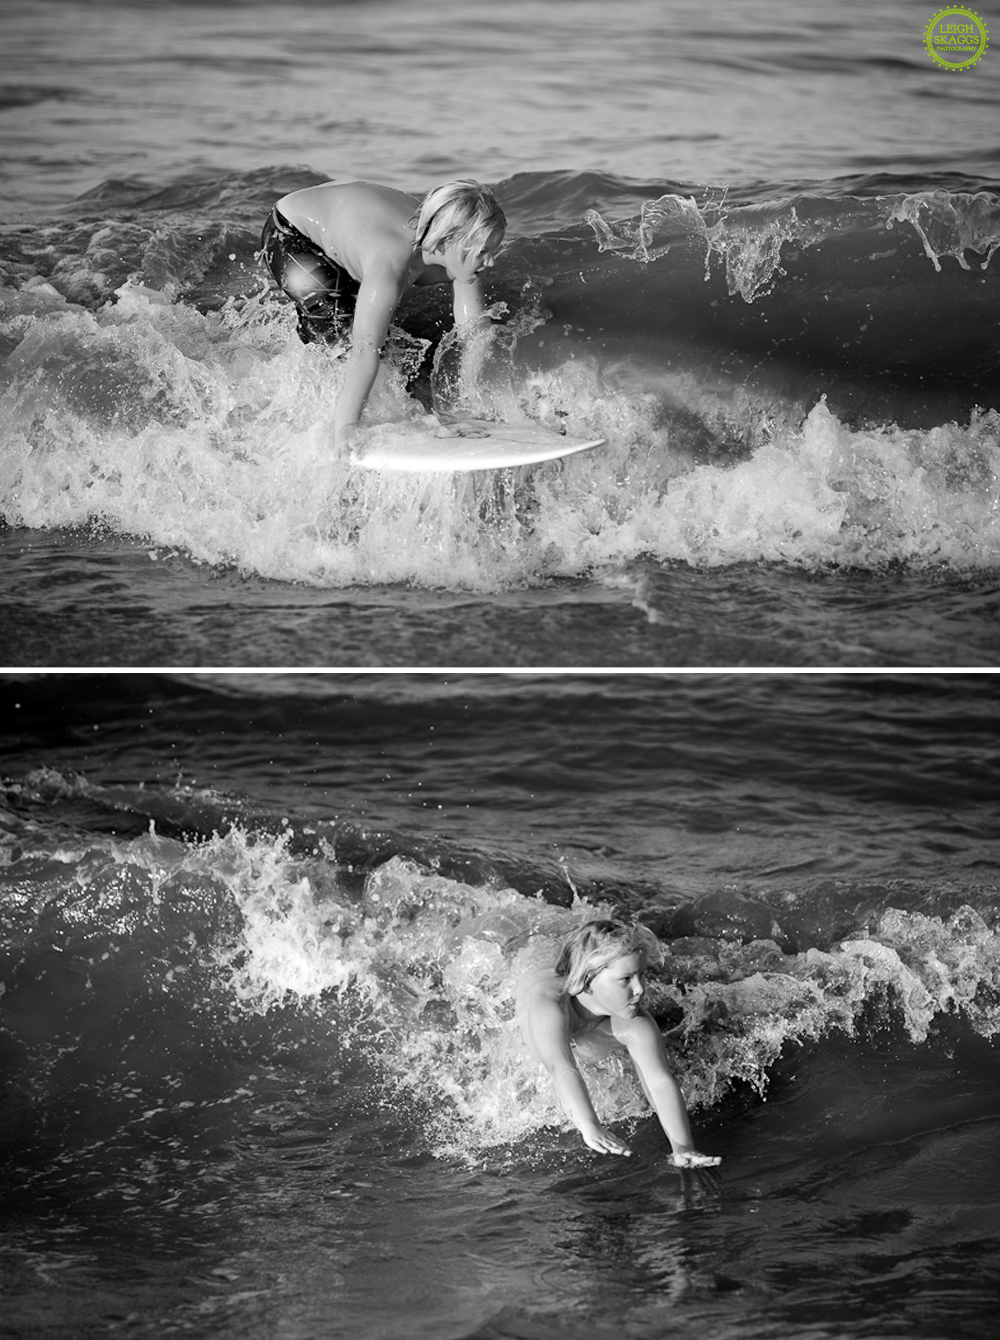 Virginia Beach Children/Teen Portrait Photographer  ~Zack and Nick~